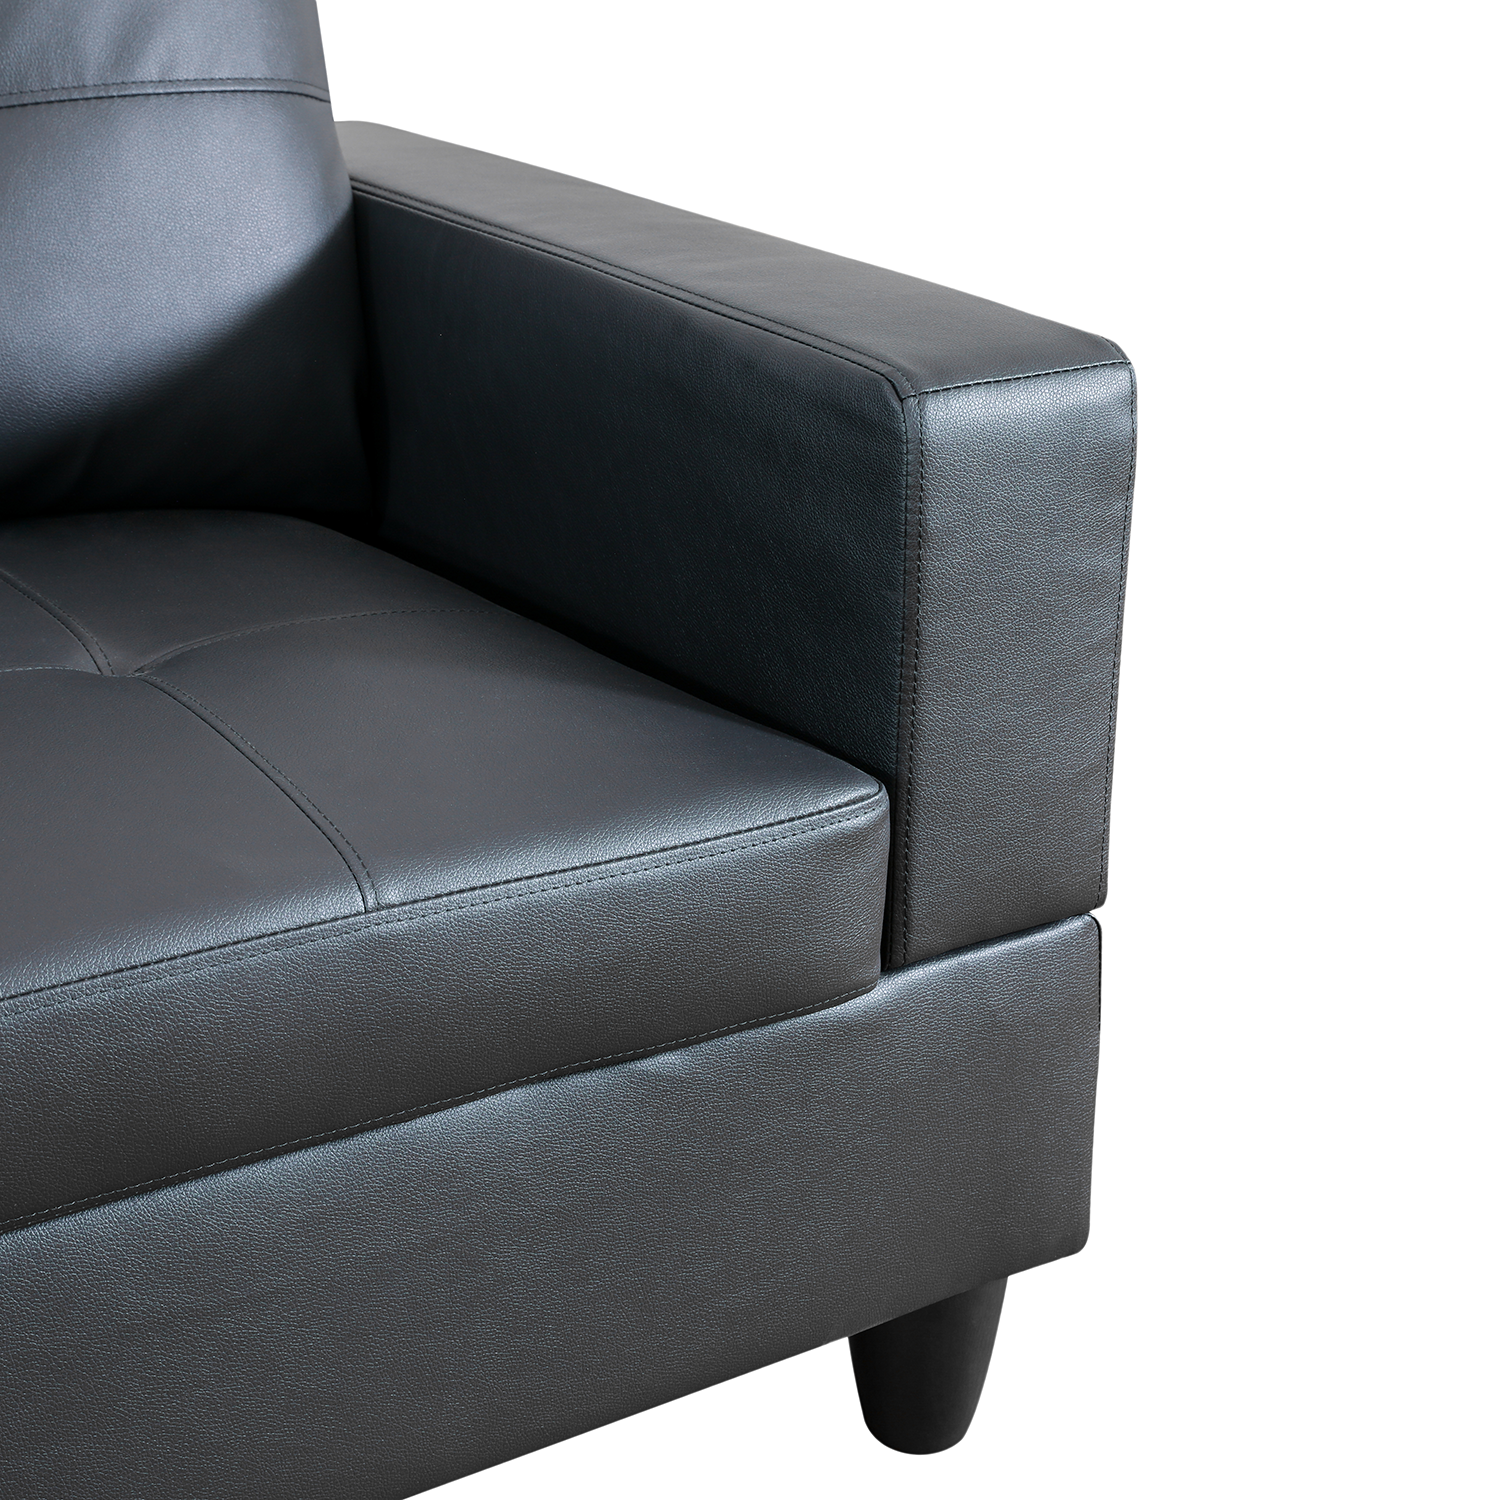 Ainehome Black L-Shape Faux Leather Sofa Set